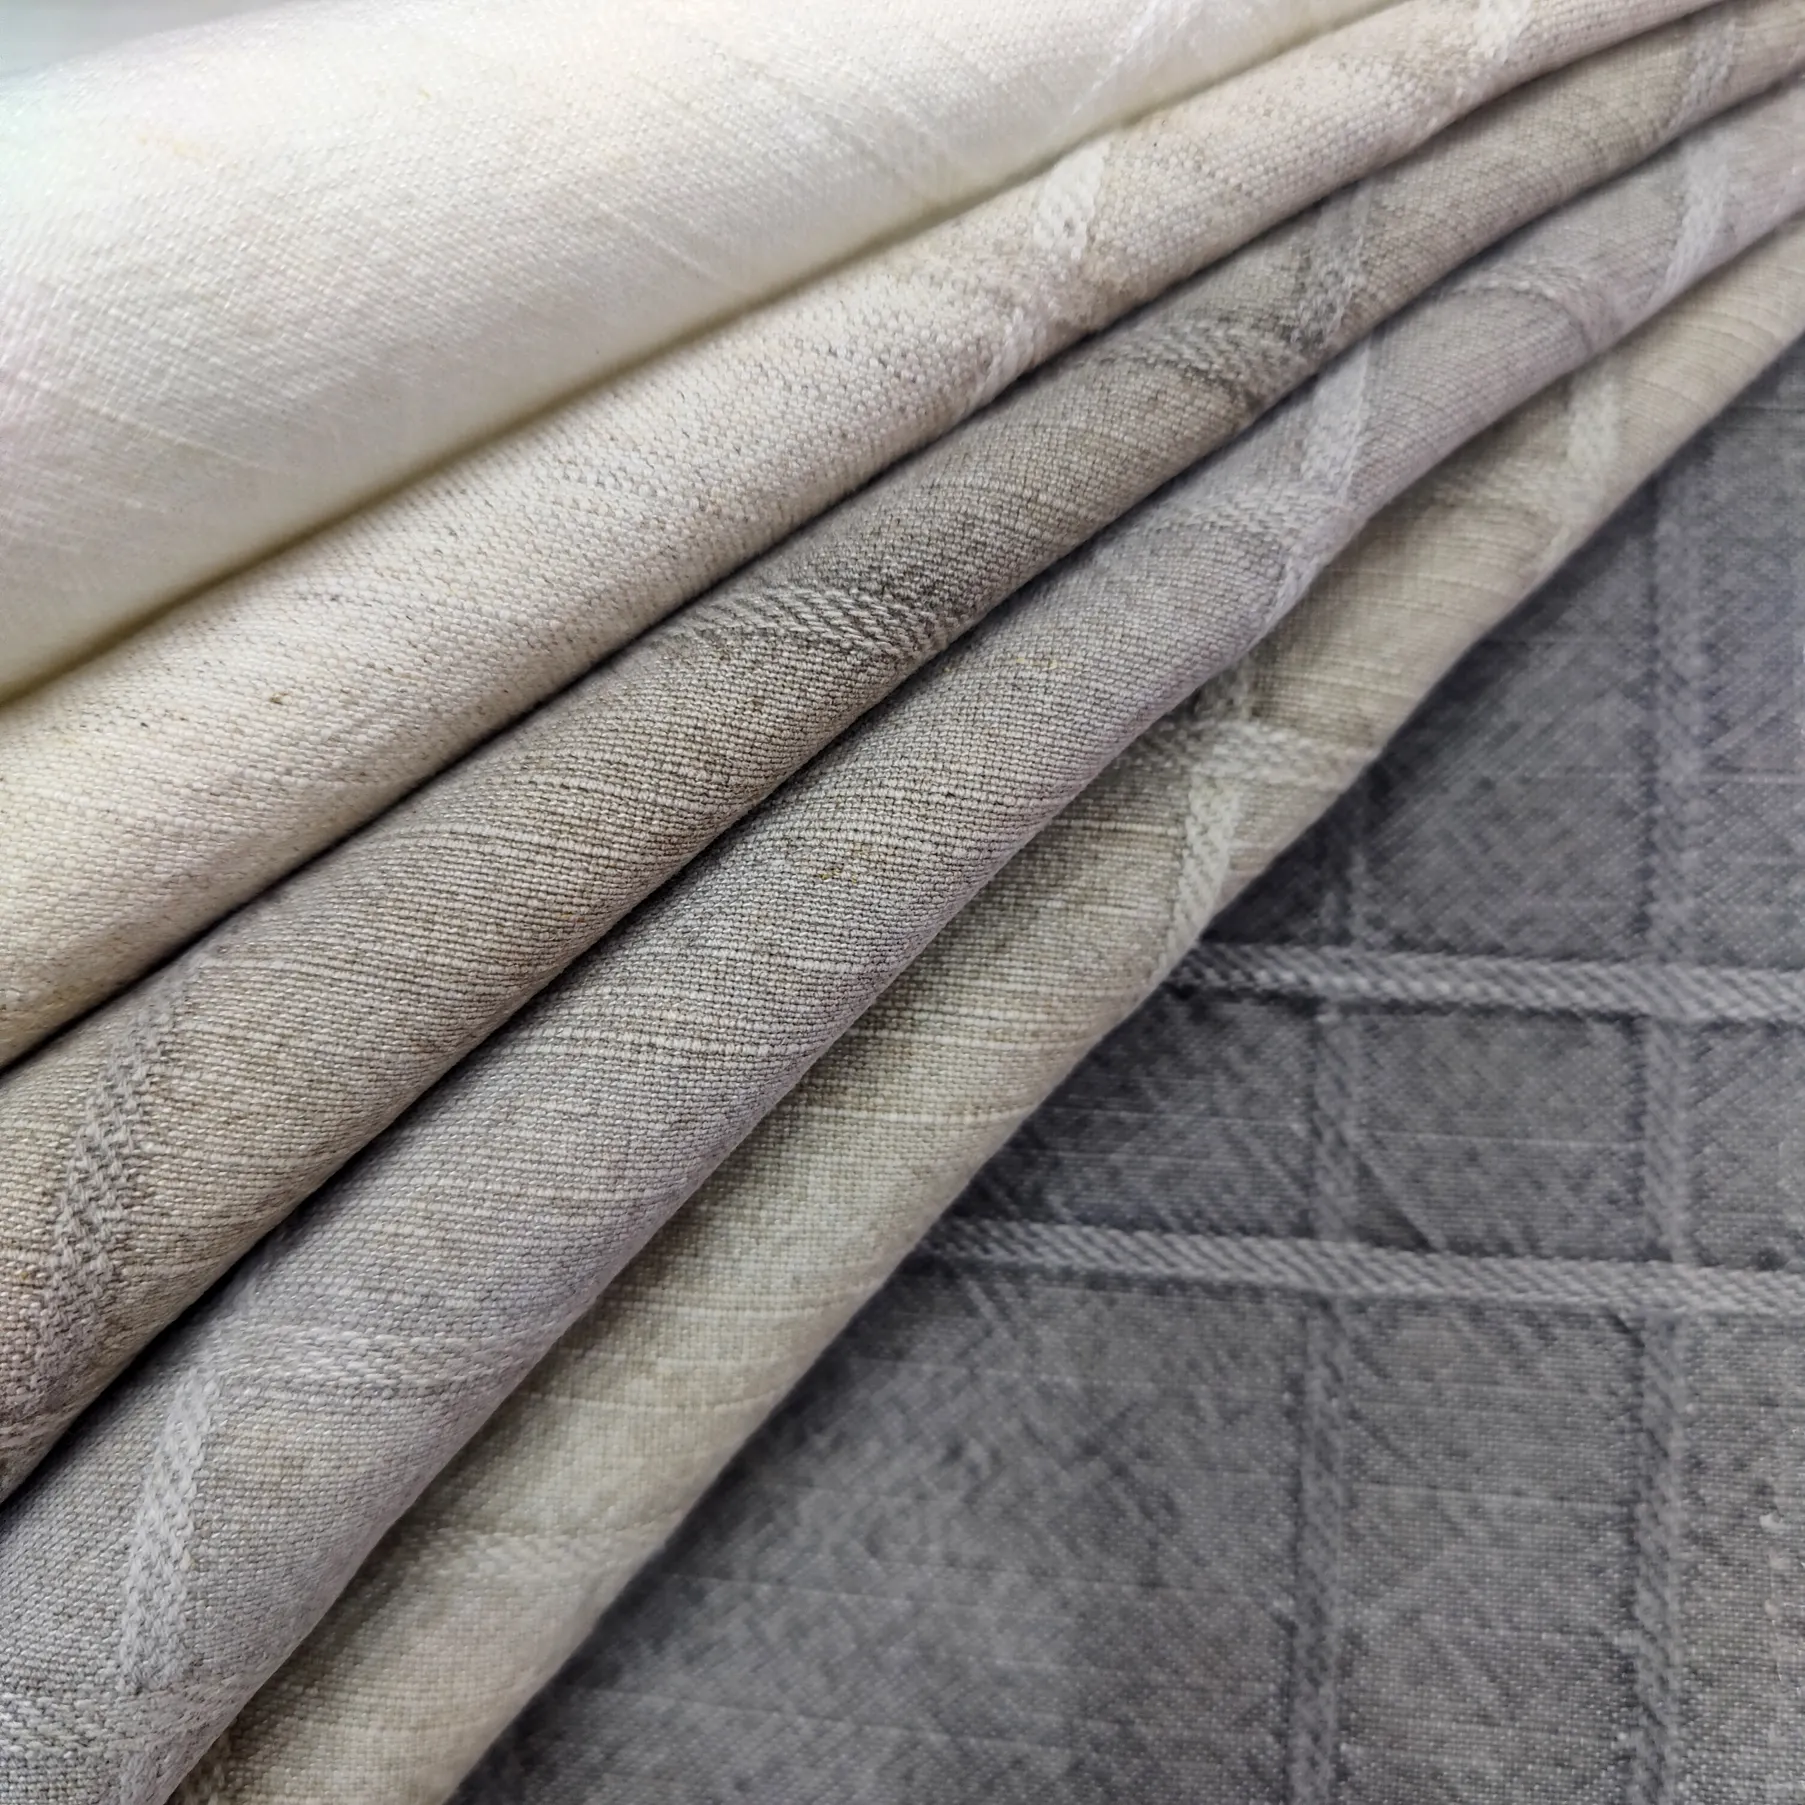 Bomar RW1547 Jacquard tessuto juta cotone misto tessuto per mobili divano tenda